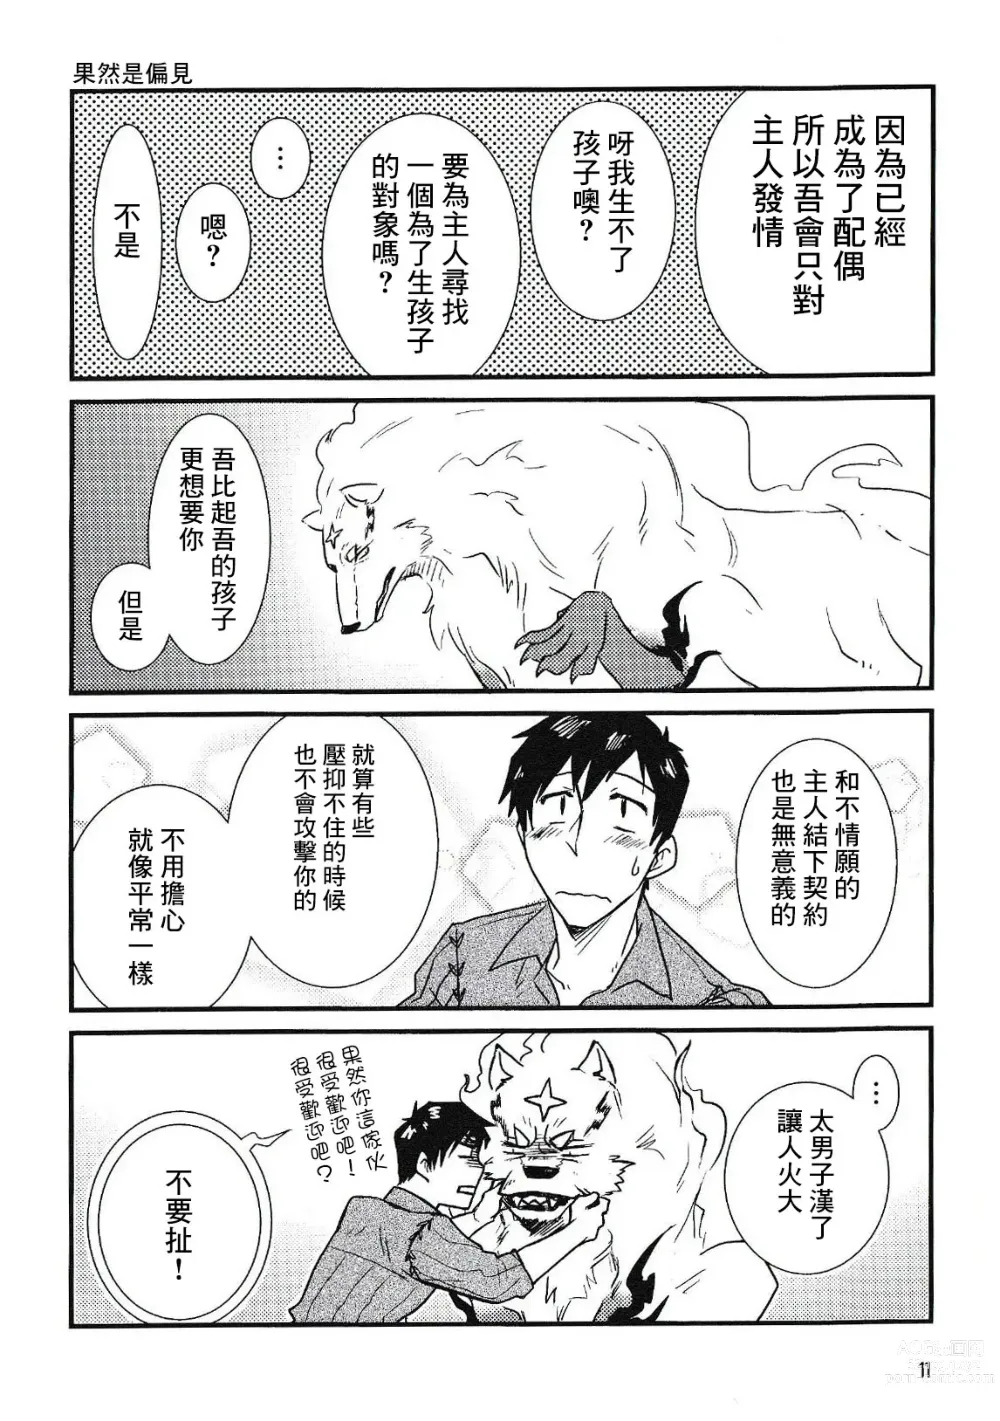 Page 11 of doujinshi NO WONDER!